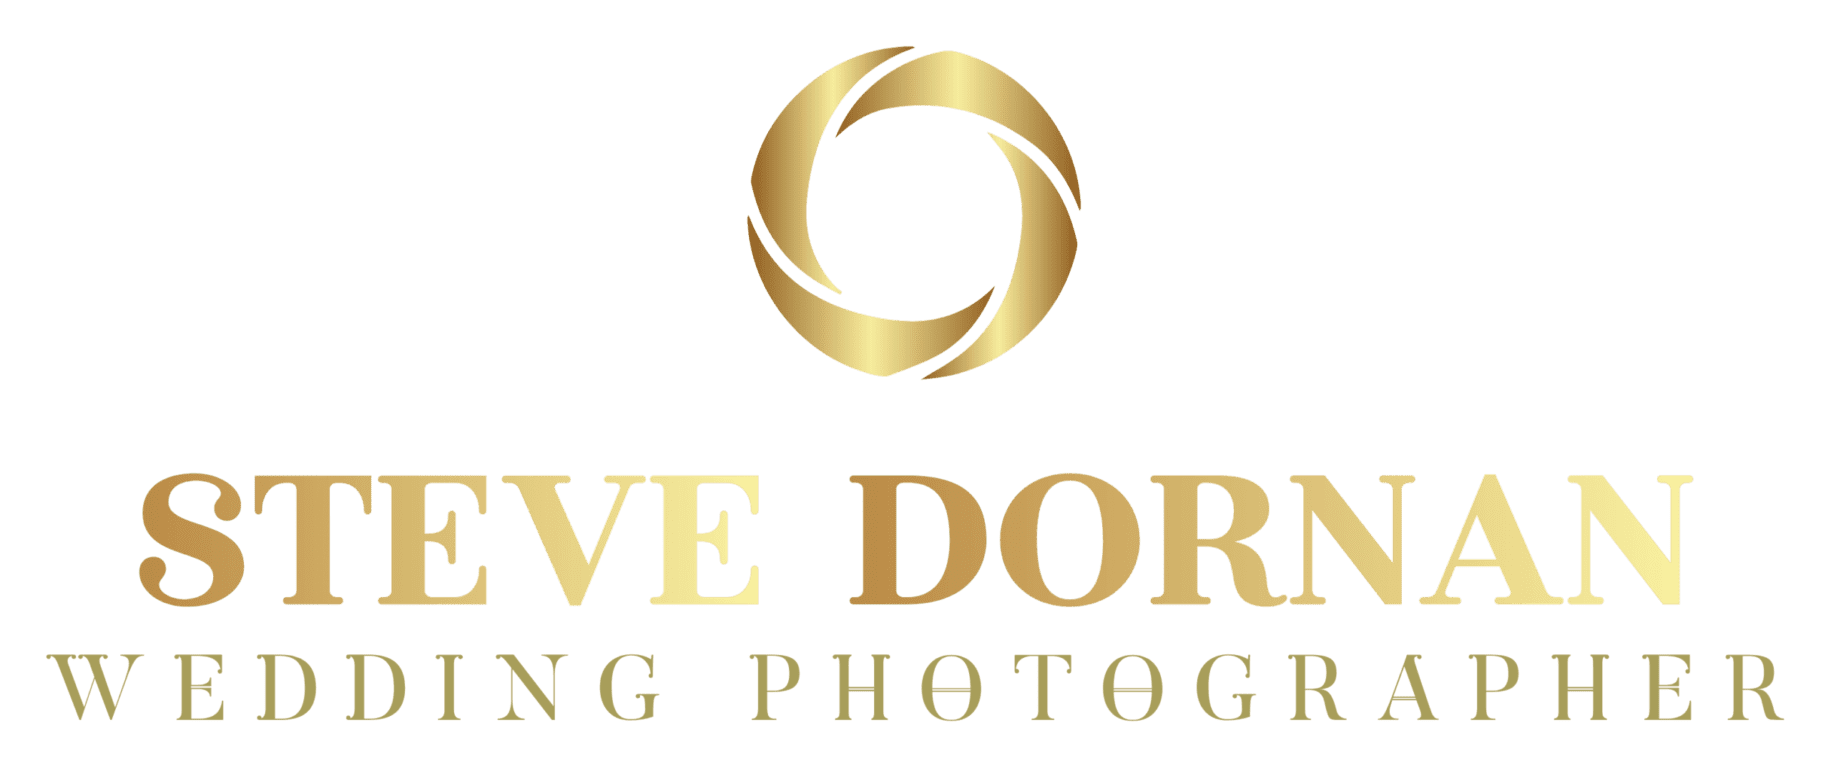 Steve Dornan Wedding Photographer East Yorkshire